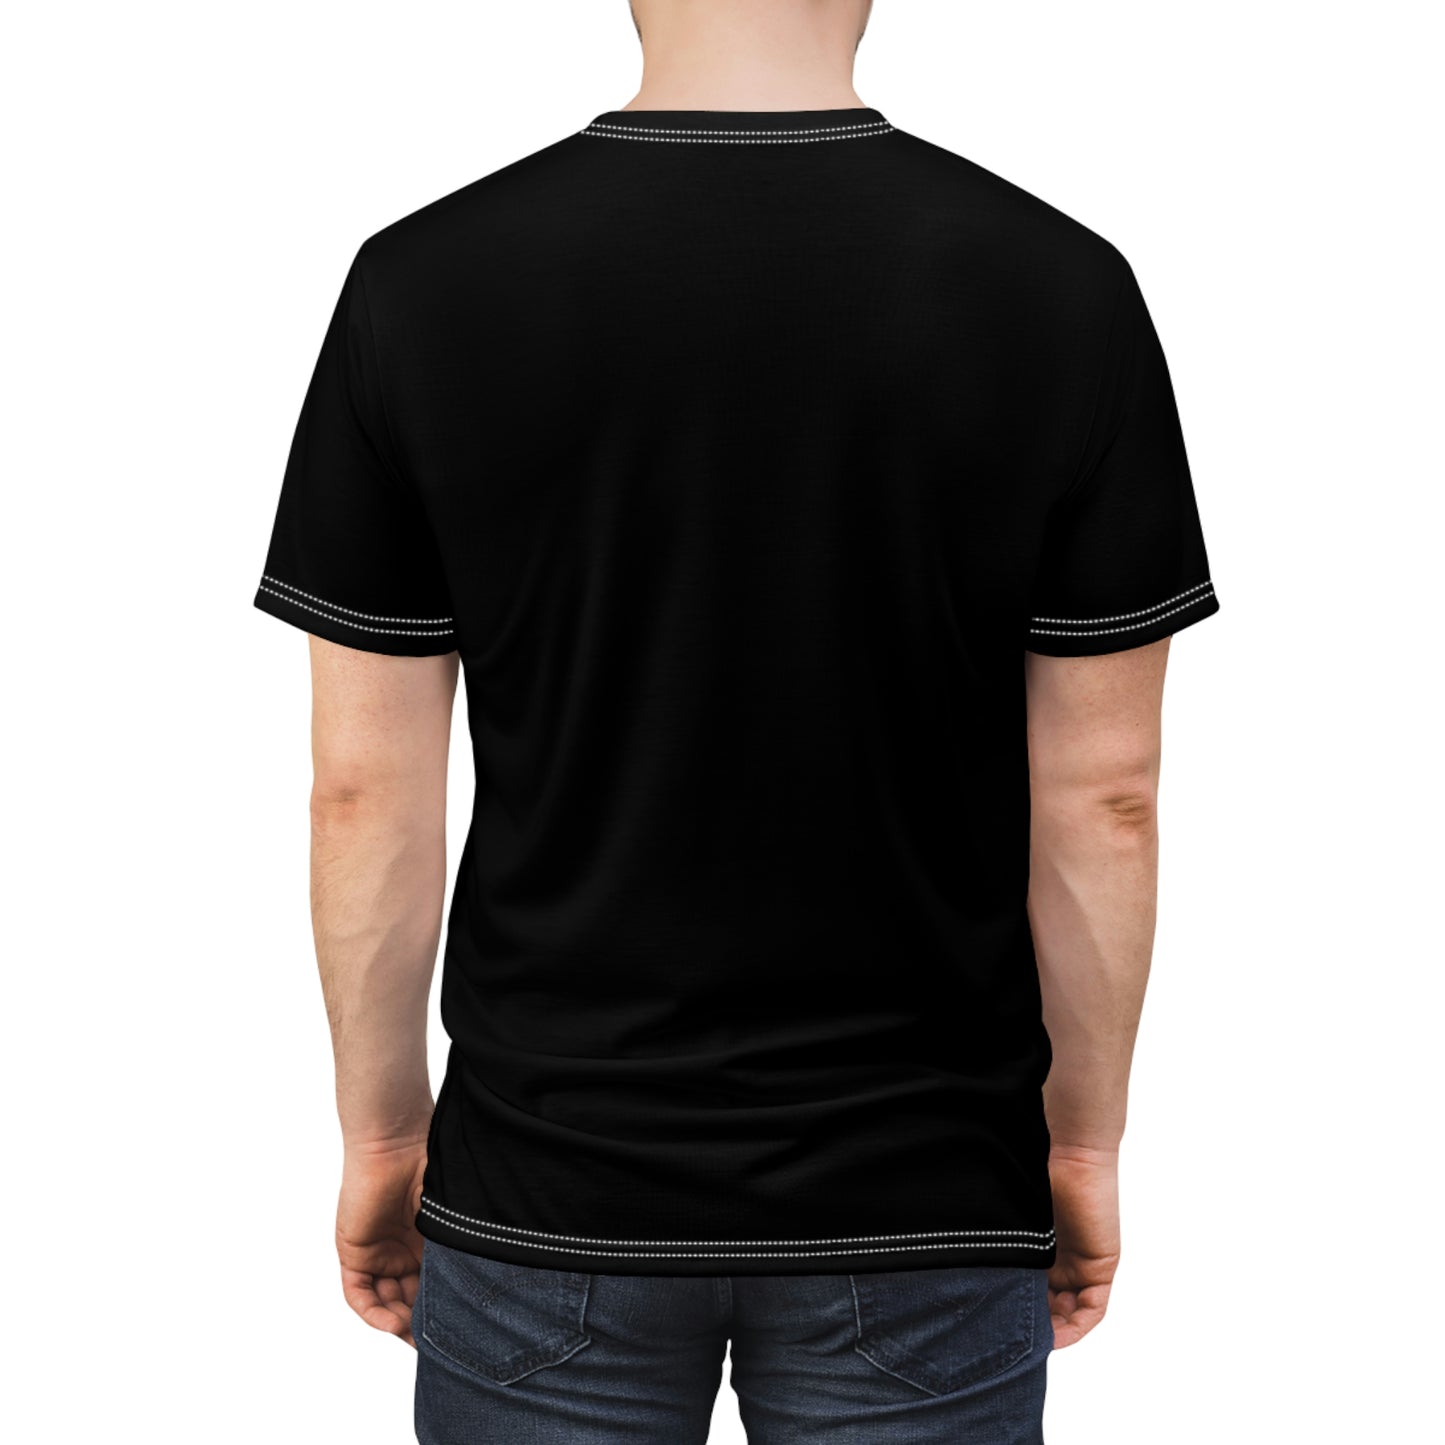 Dark Days - Unisex All-Over Print Cut & Sew T-Shirt